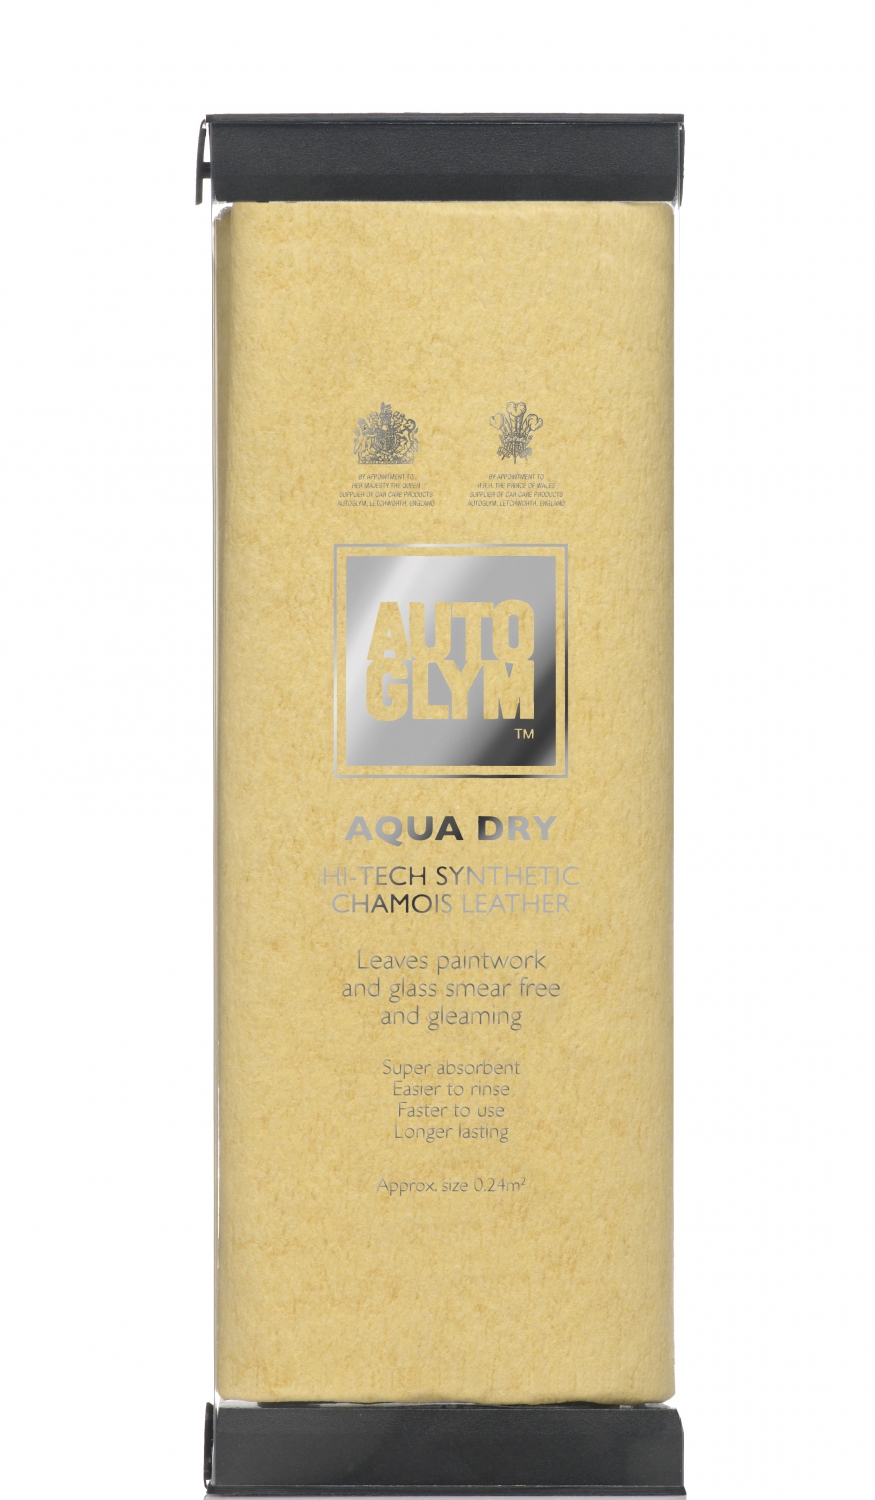 Køb Autoglym Vaskeskind - Aqua Dry - Pris 159.00 kr.